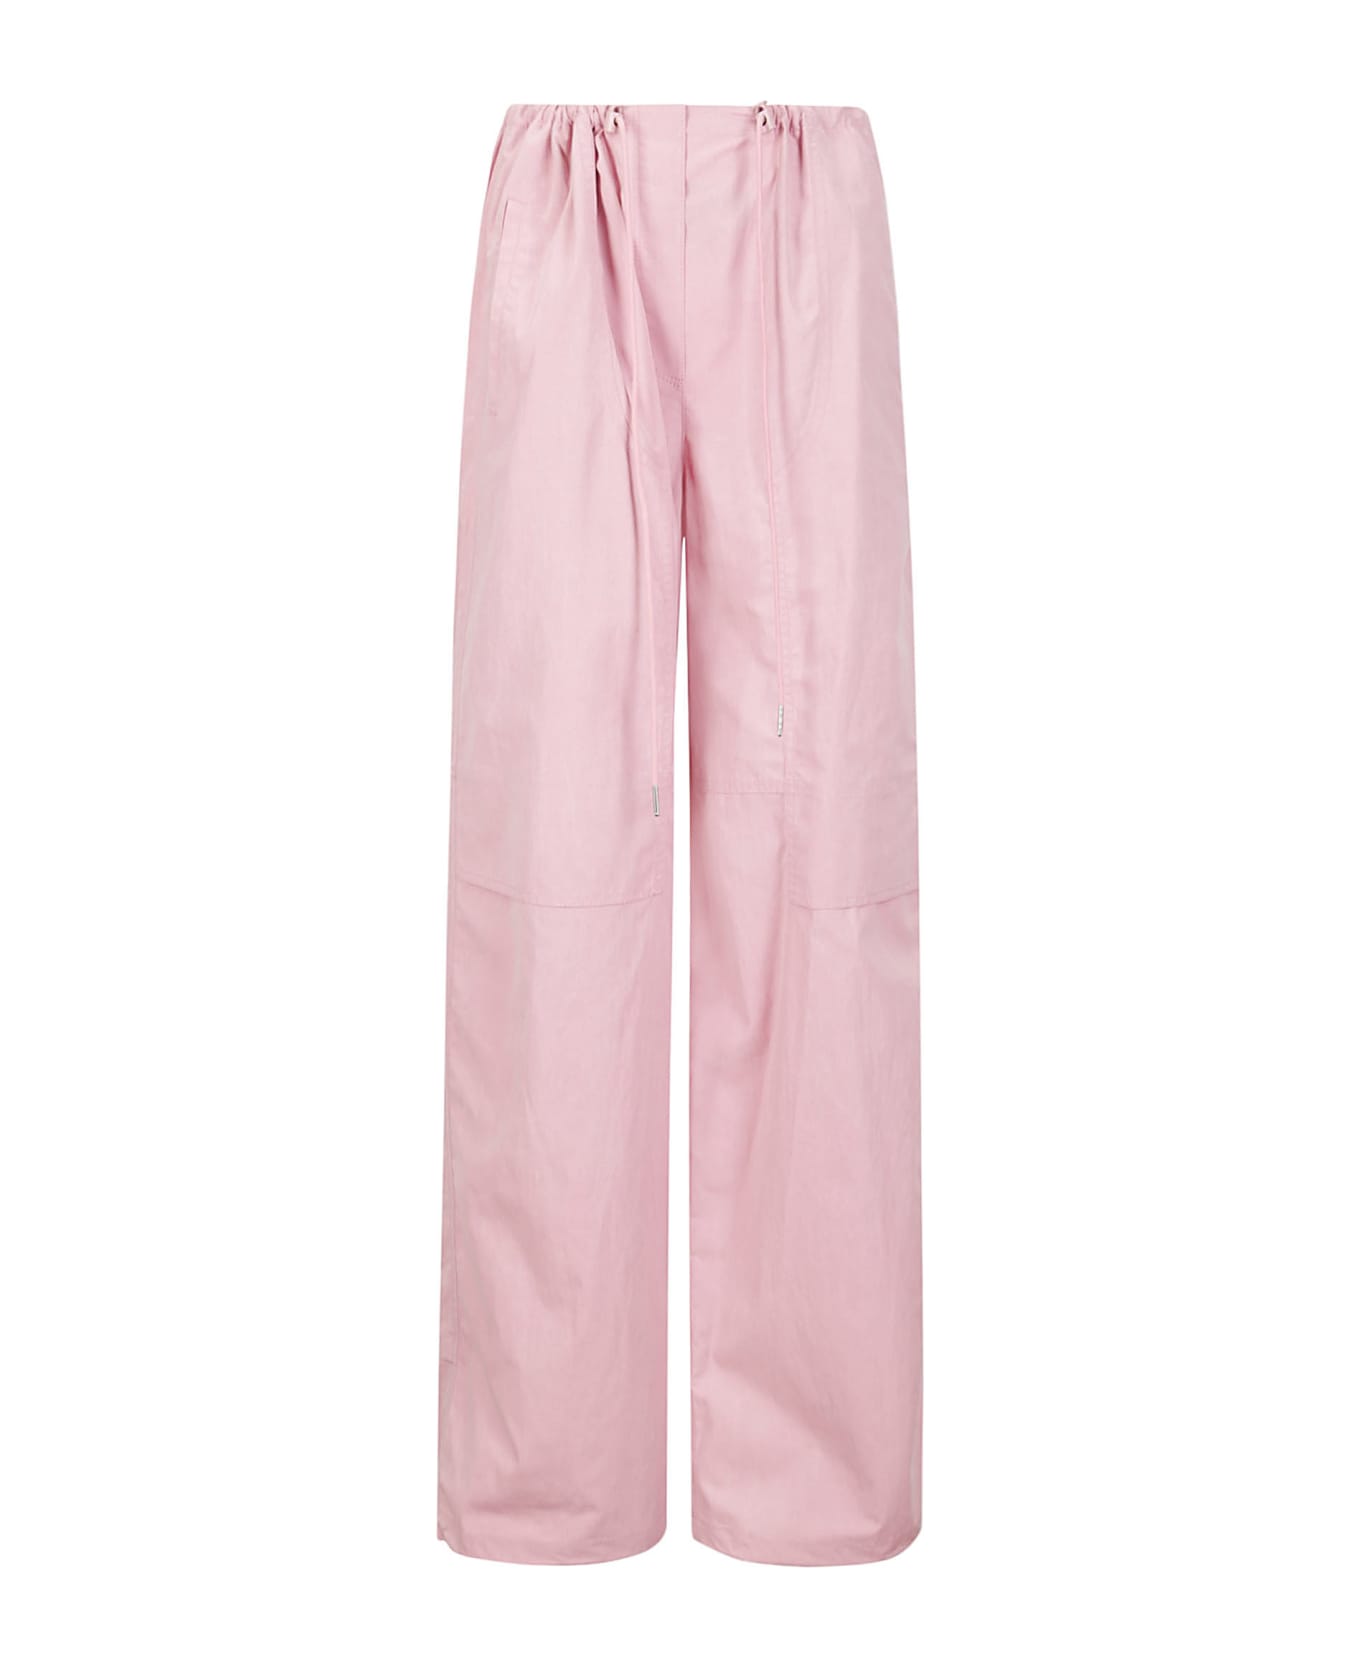 Juun.J Ice Pink Utility Pants - PINK